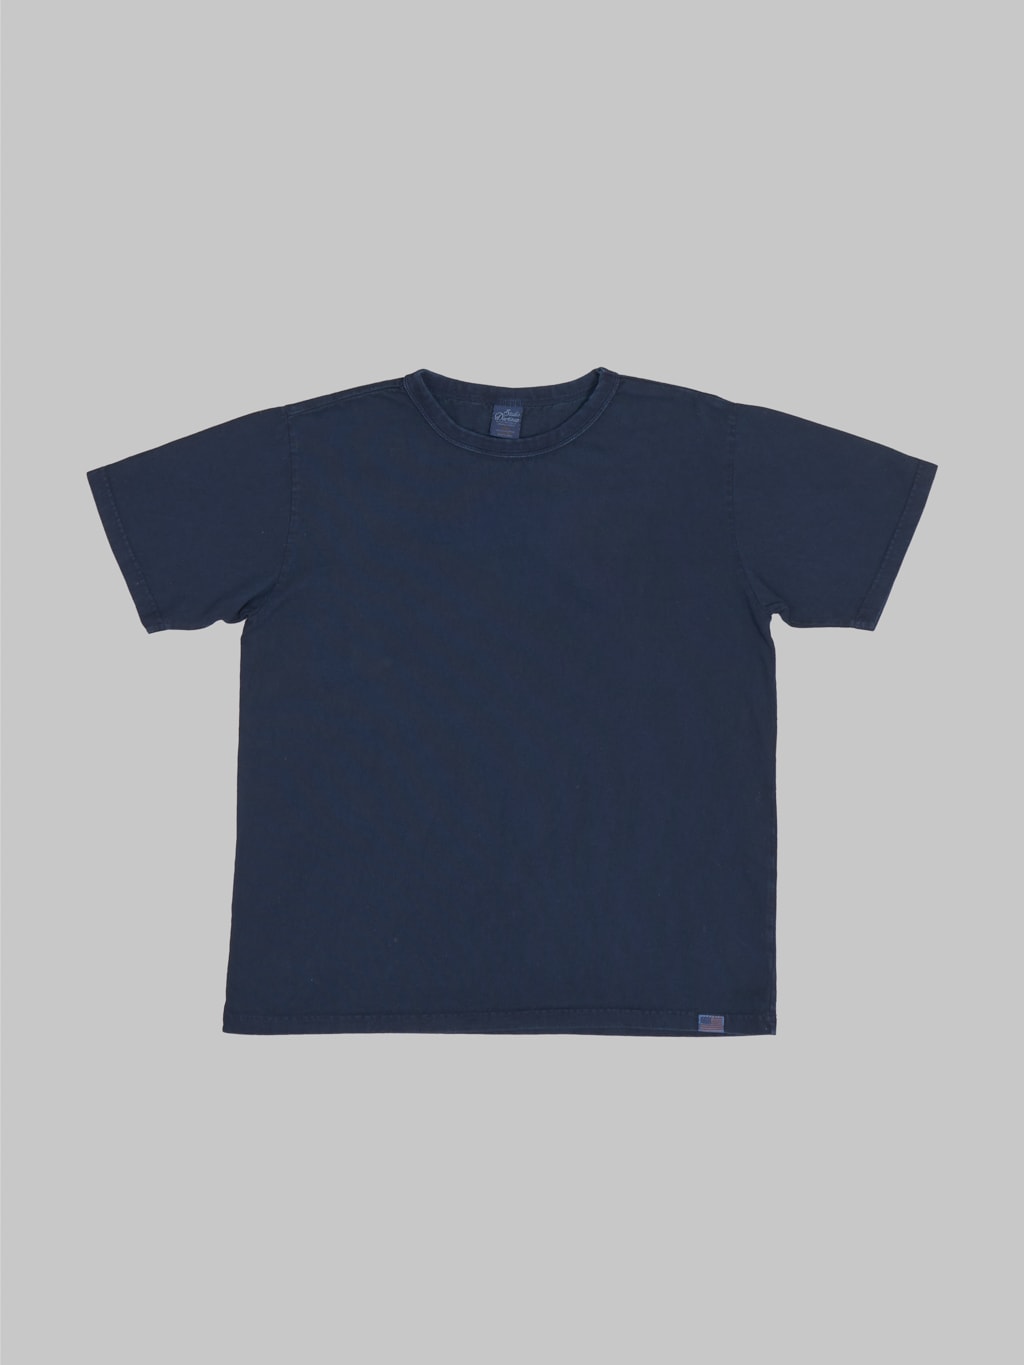 Studio D'Artisan 8136B USA Cotton T-Shirt Dark Indigo